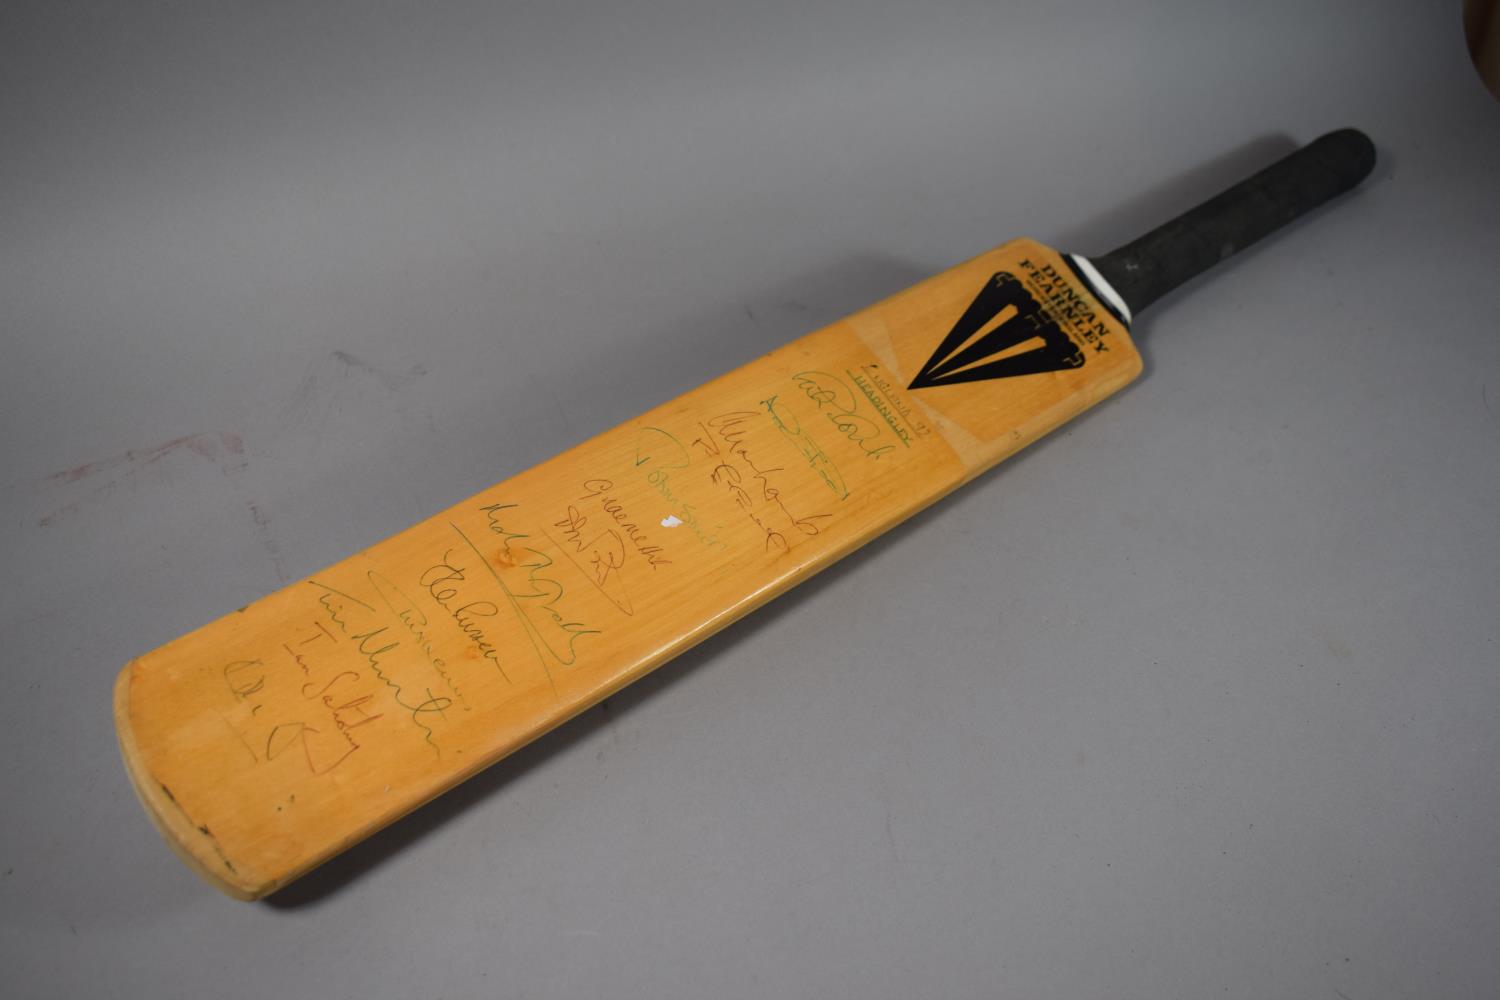 A Signed Full Size Duncan Fearnley Cricket Bat "England '92, Headingley" 13 Autographs